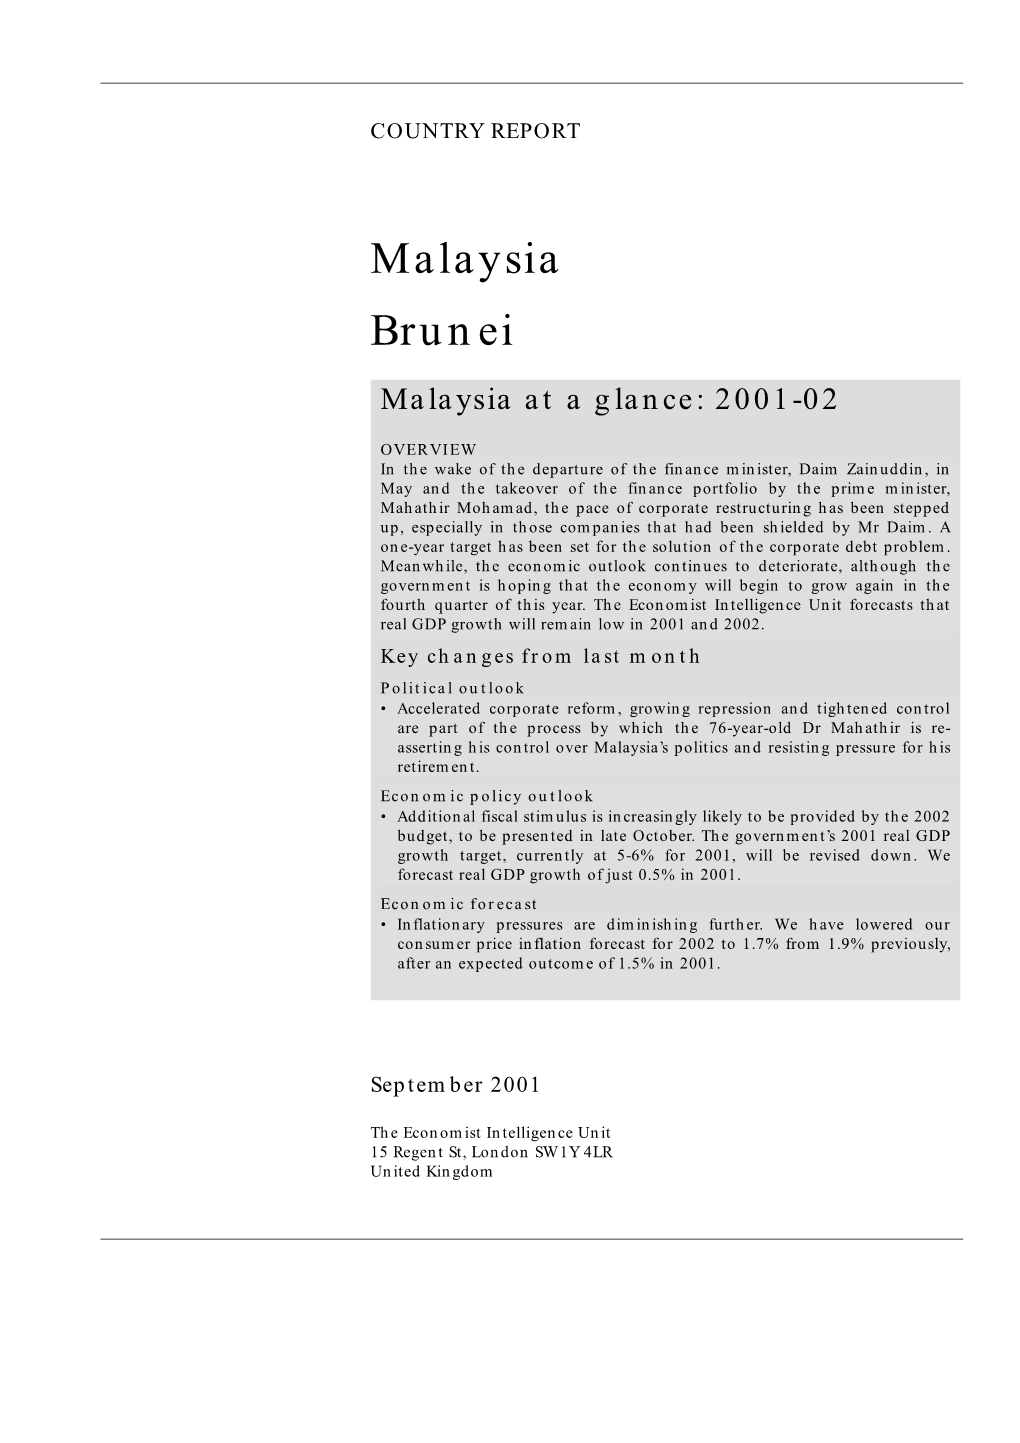 Malaysia Brunei Malaysia at a Glance: 2001-02